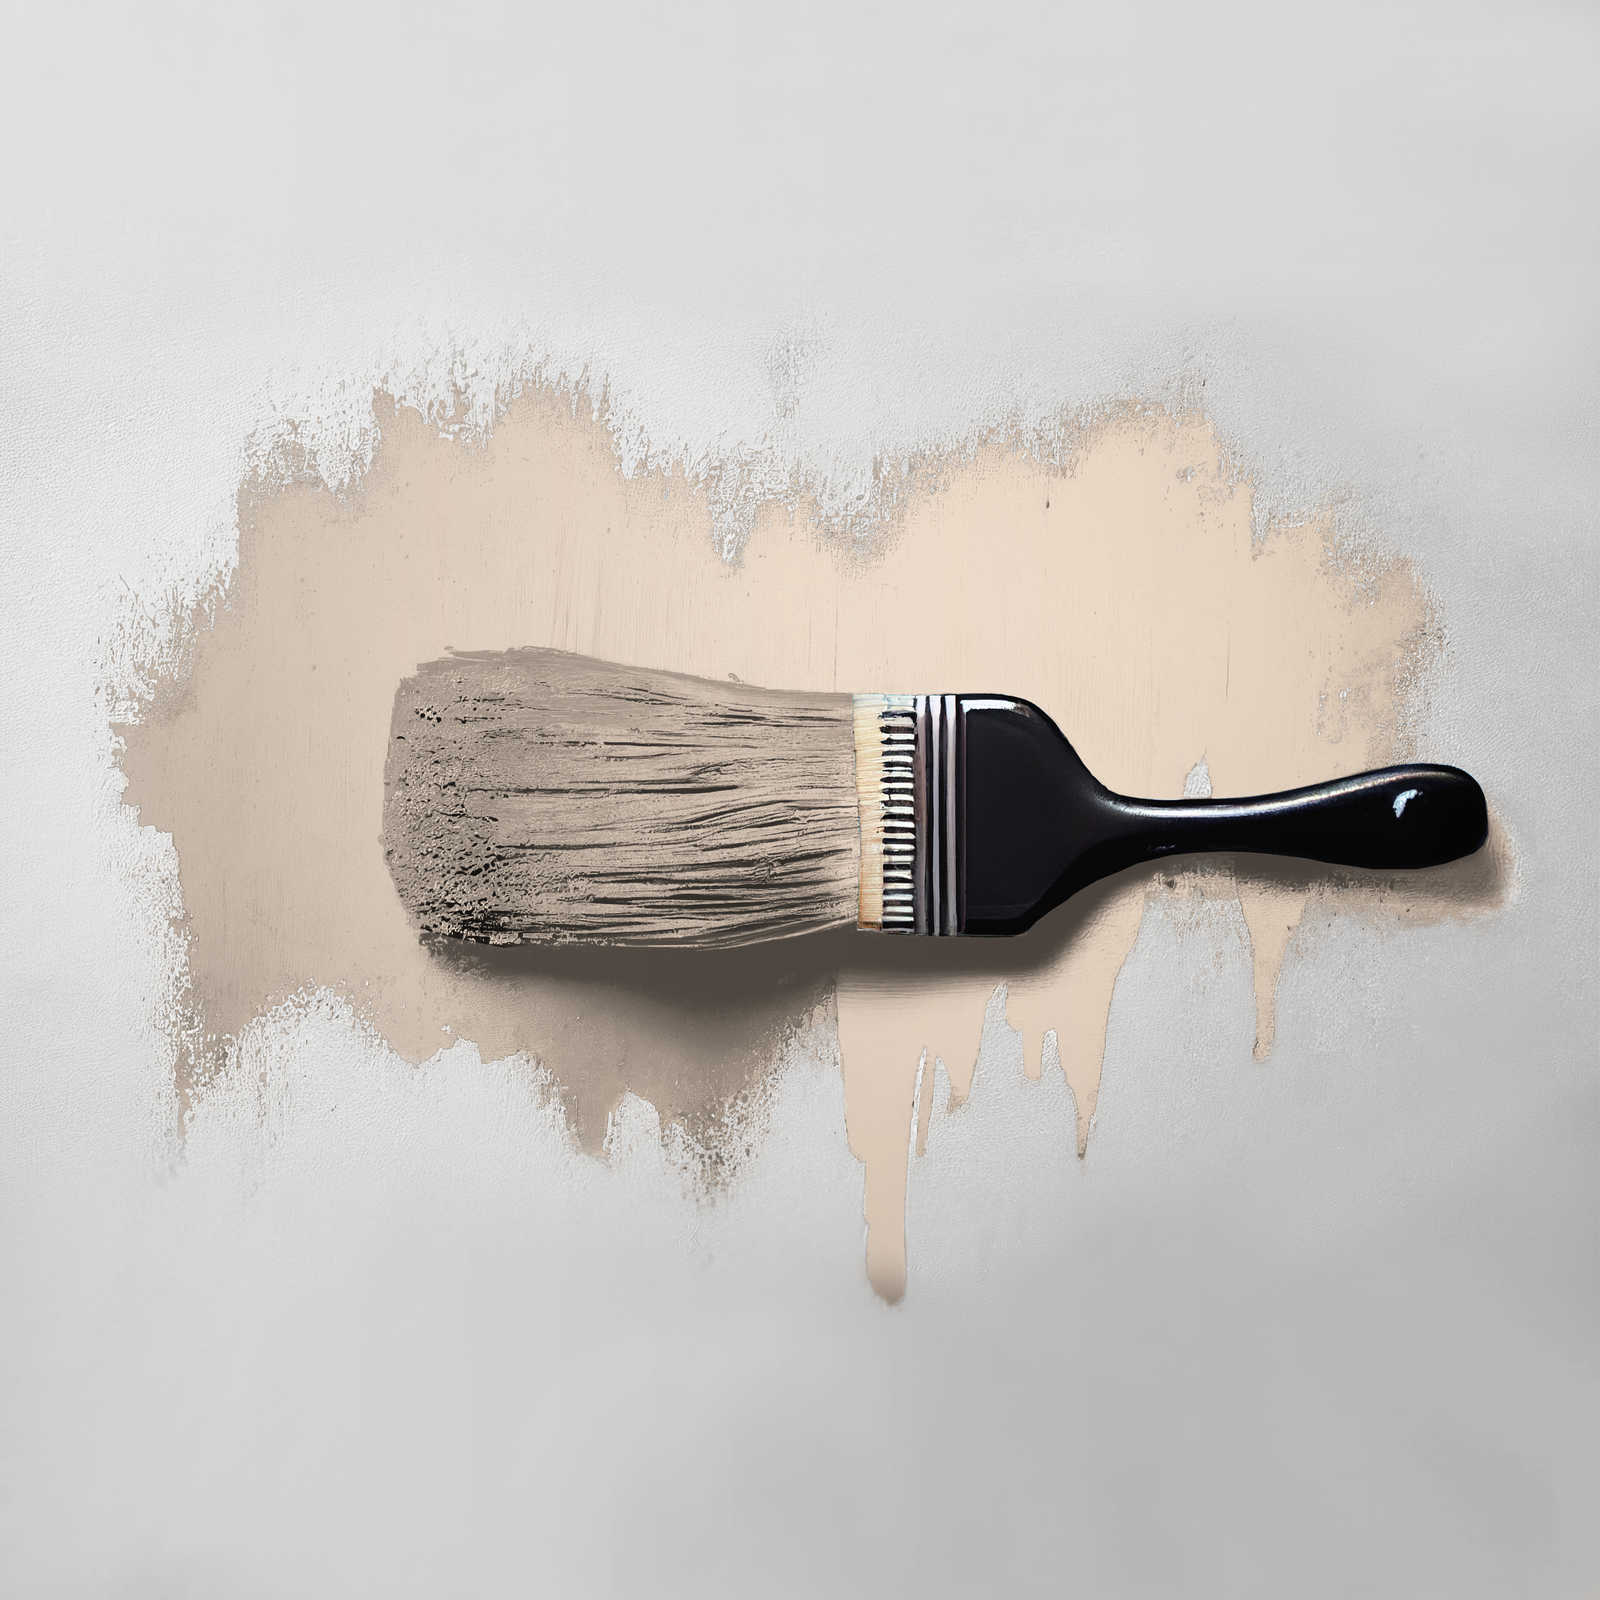             Pintura mural TCK6020 »Chalky Chickpeas« en beige claro fresco – 2,5 litro
        